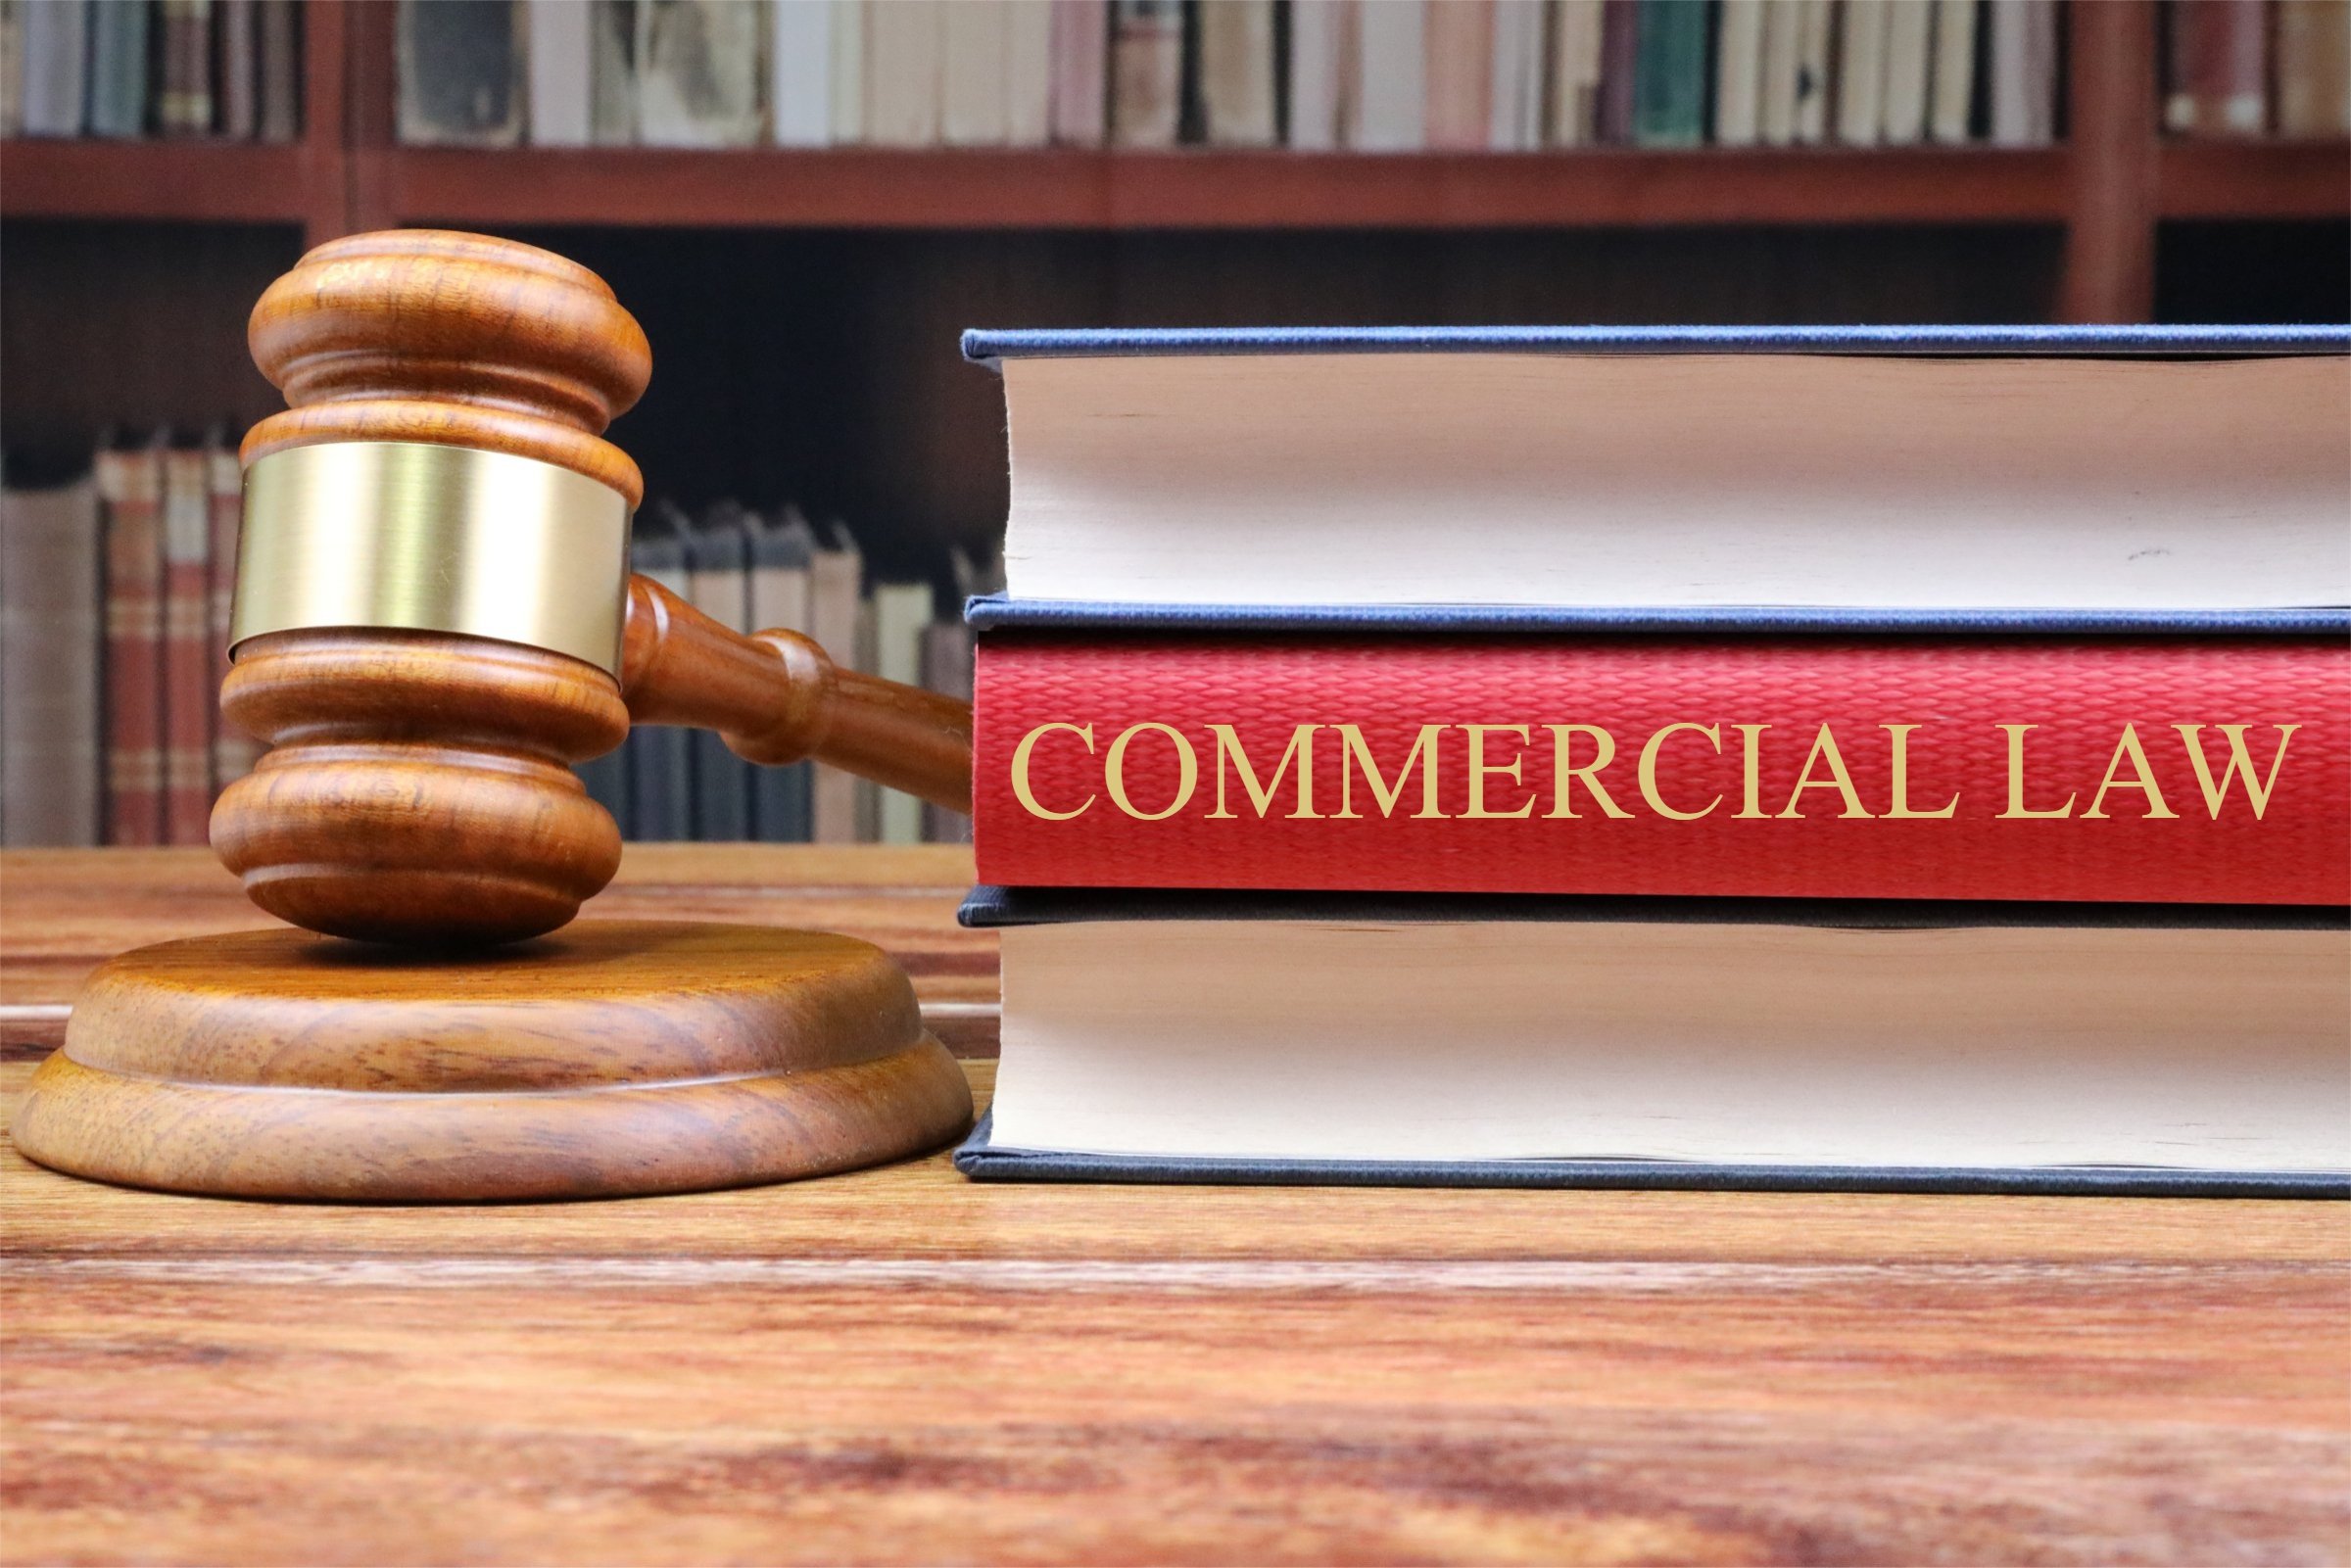 Commercial Law - FDI 